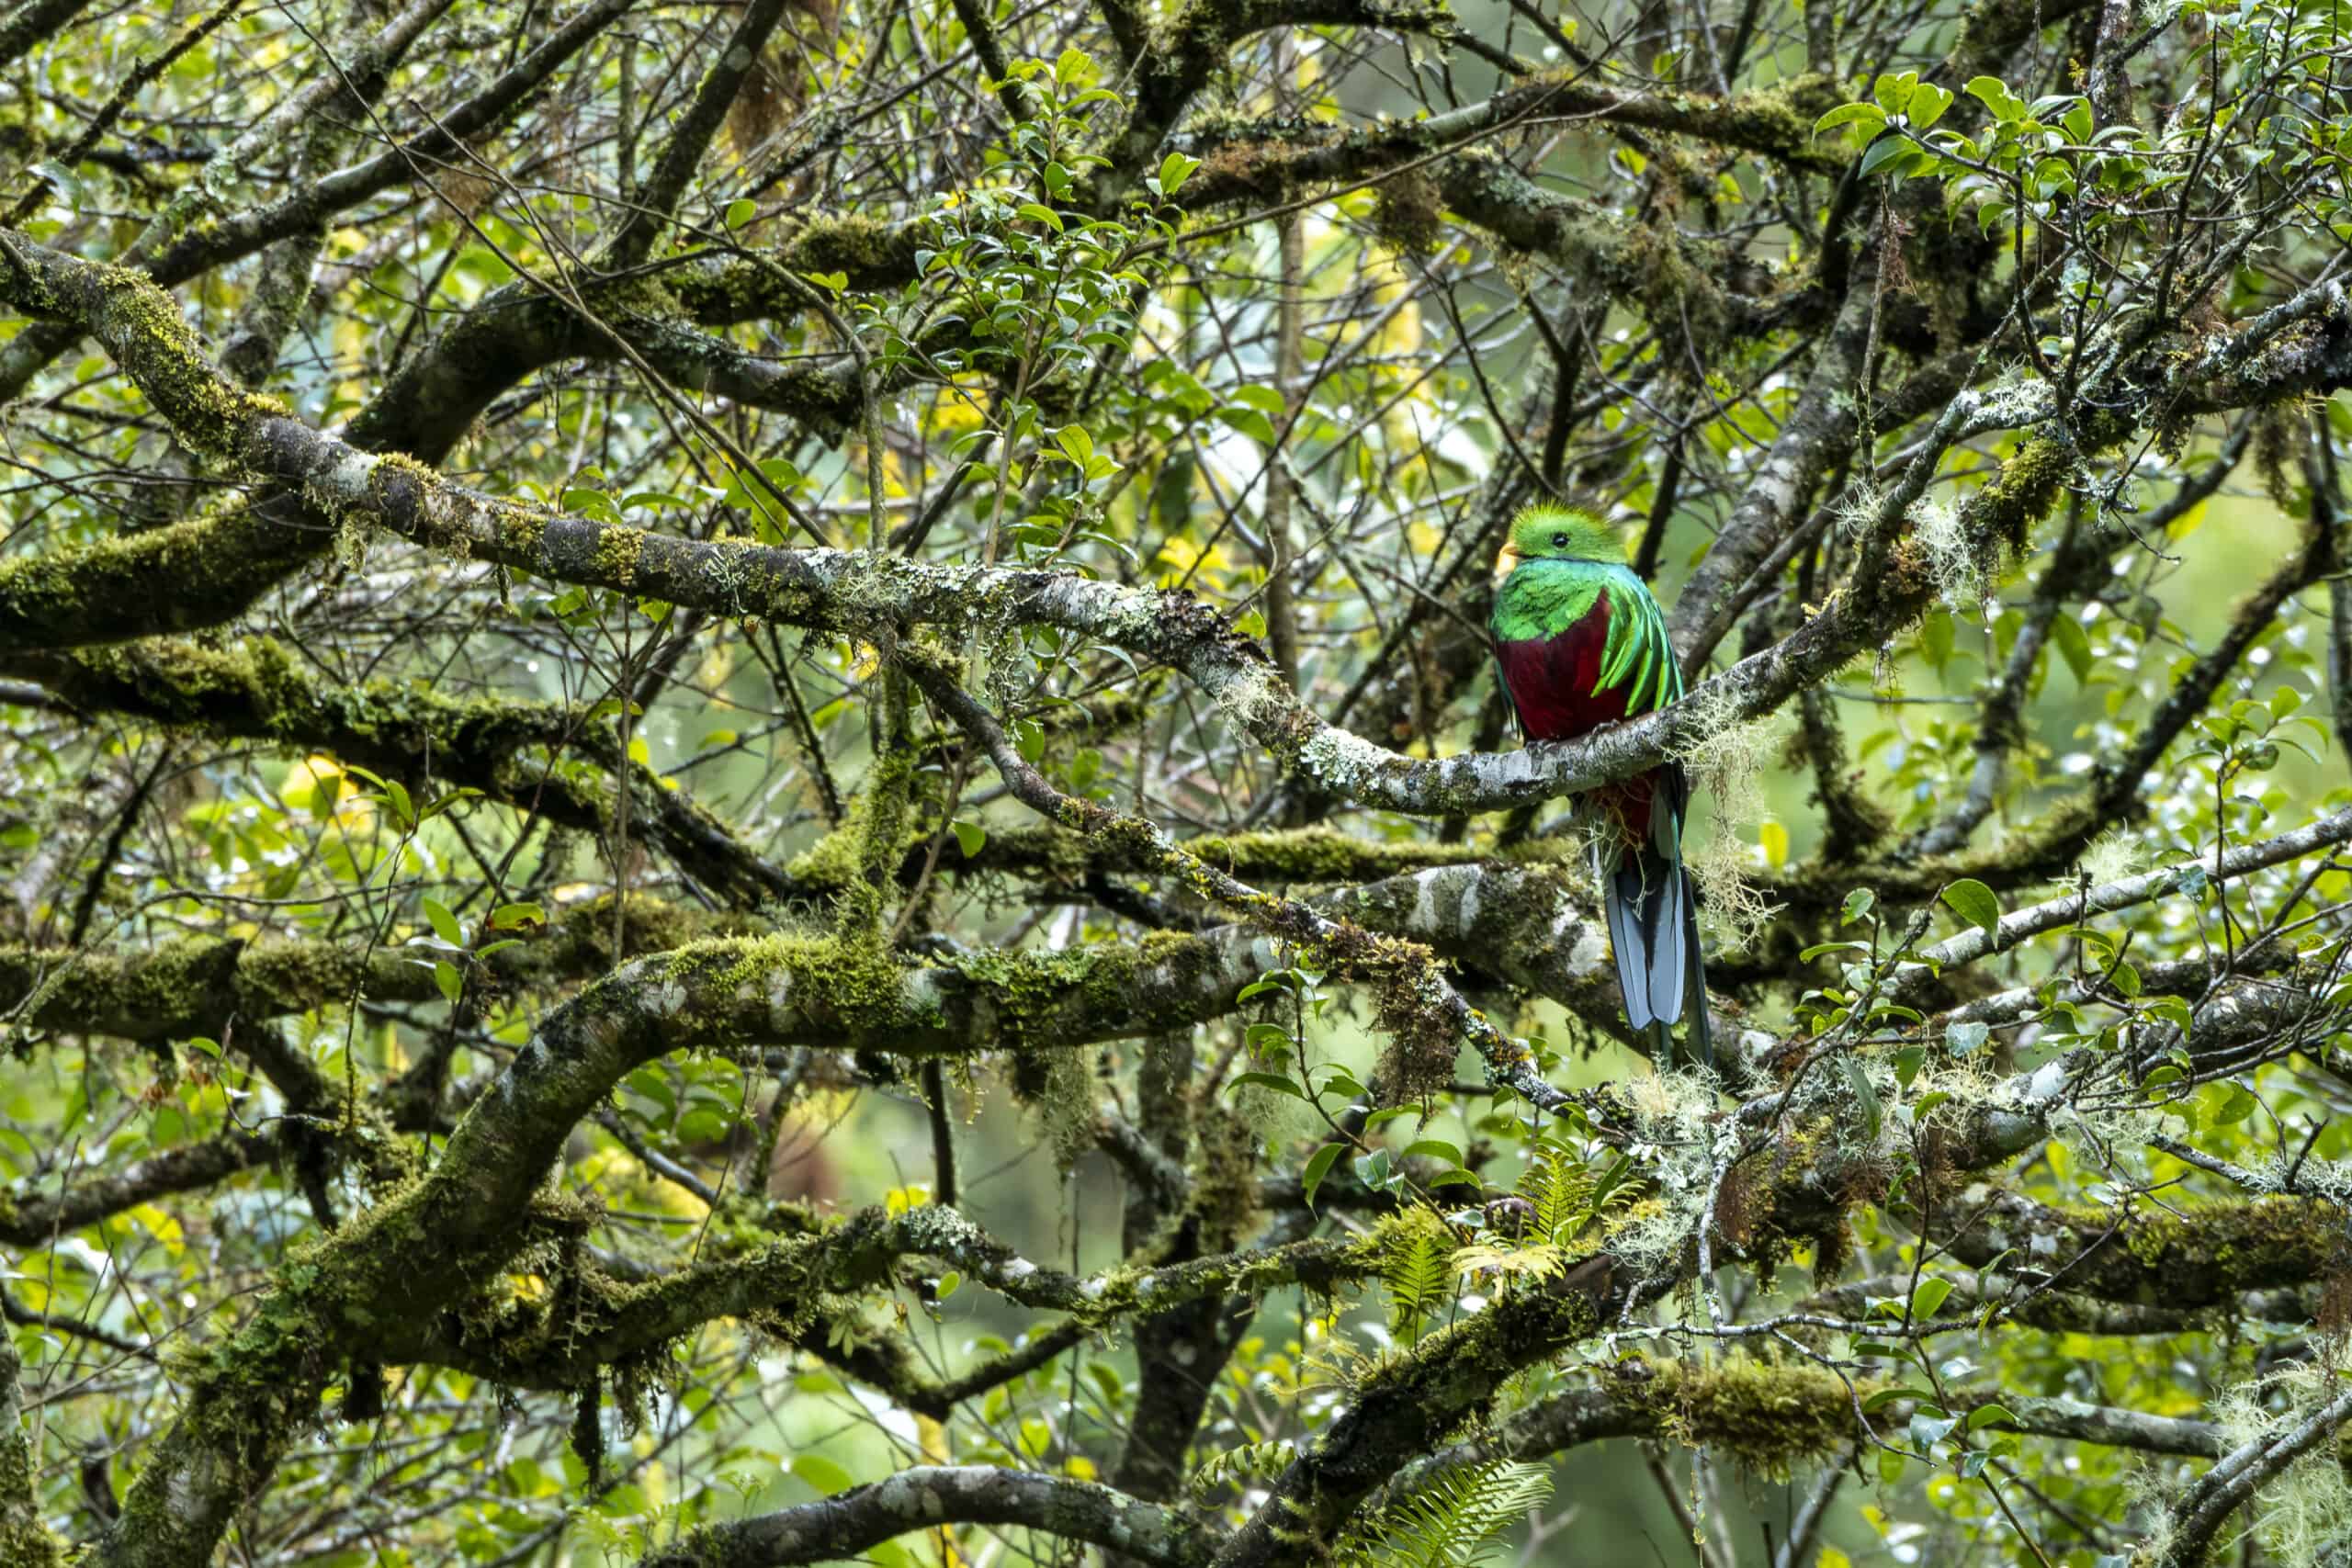 Quetzal Costa Rica